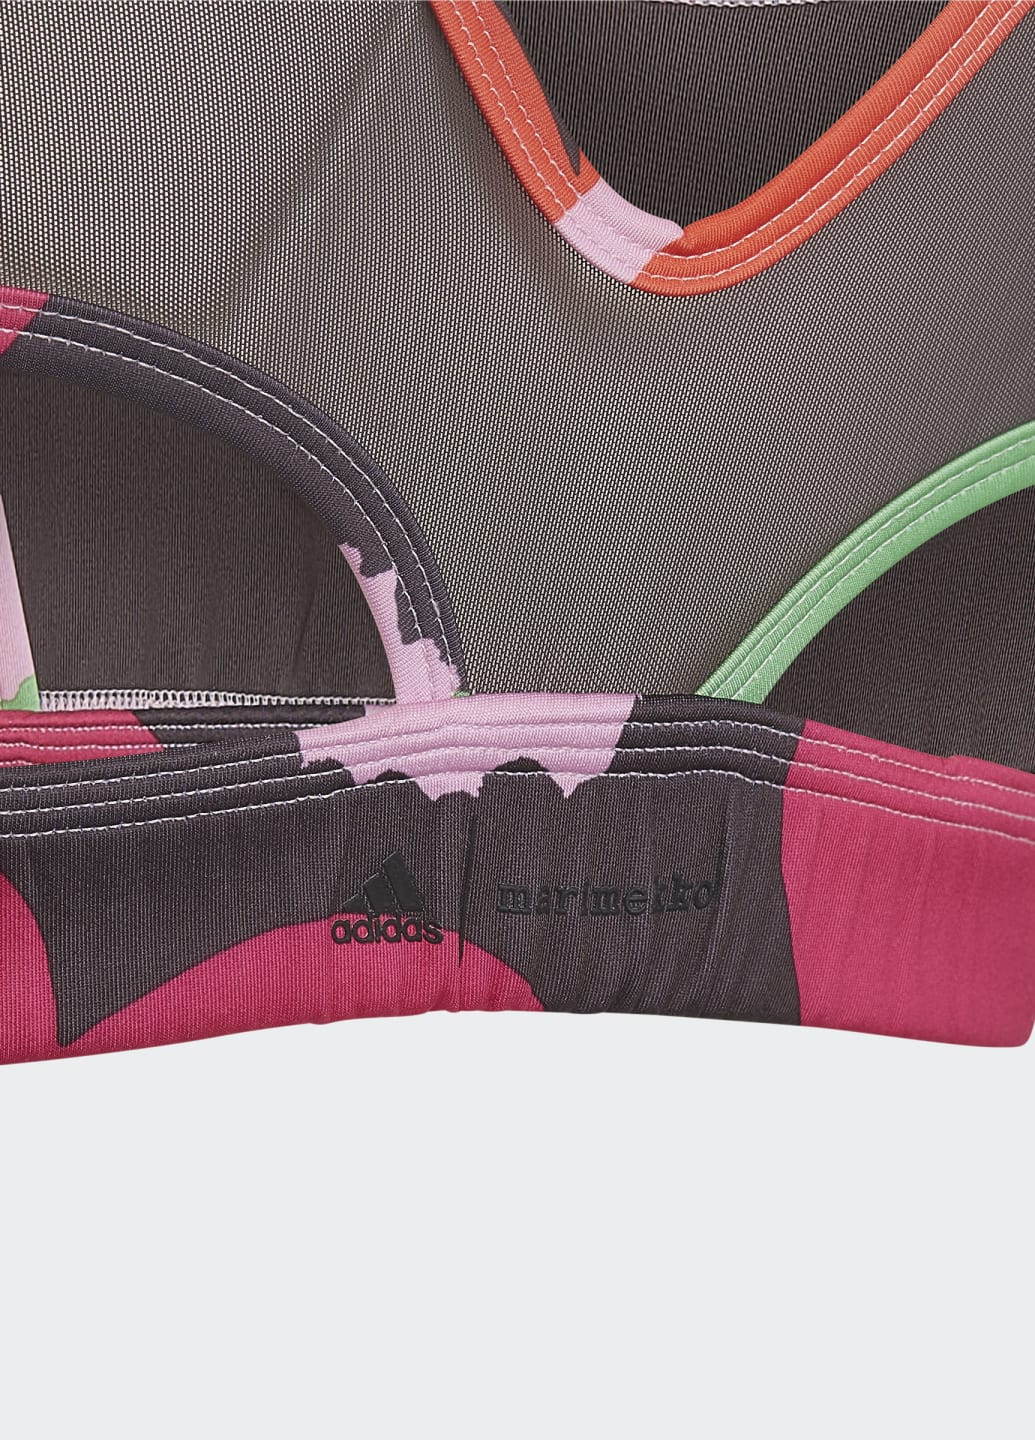 Рожевий спортивний бра x marimekko believe this aeroready adidas